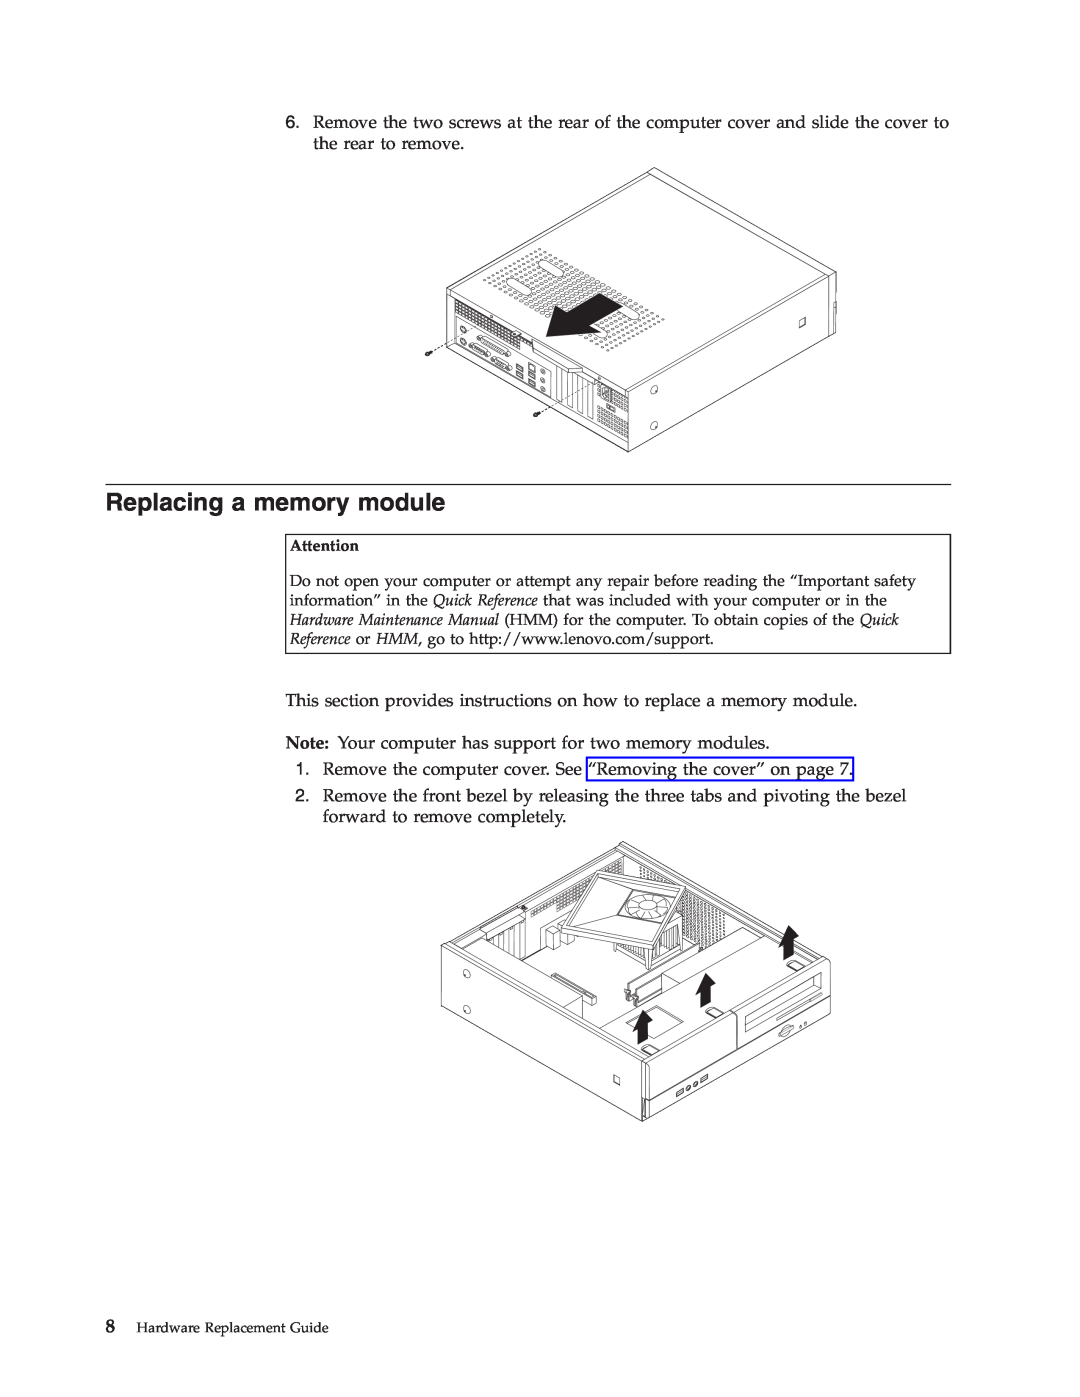 Lenovo 3000 manual Replacing a memory module, 8Hardware Replacement Guide 